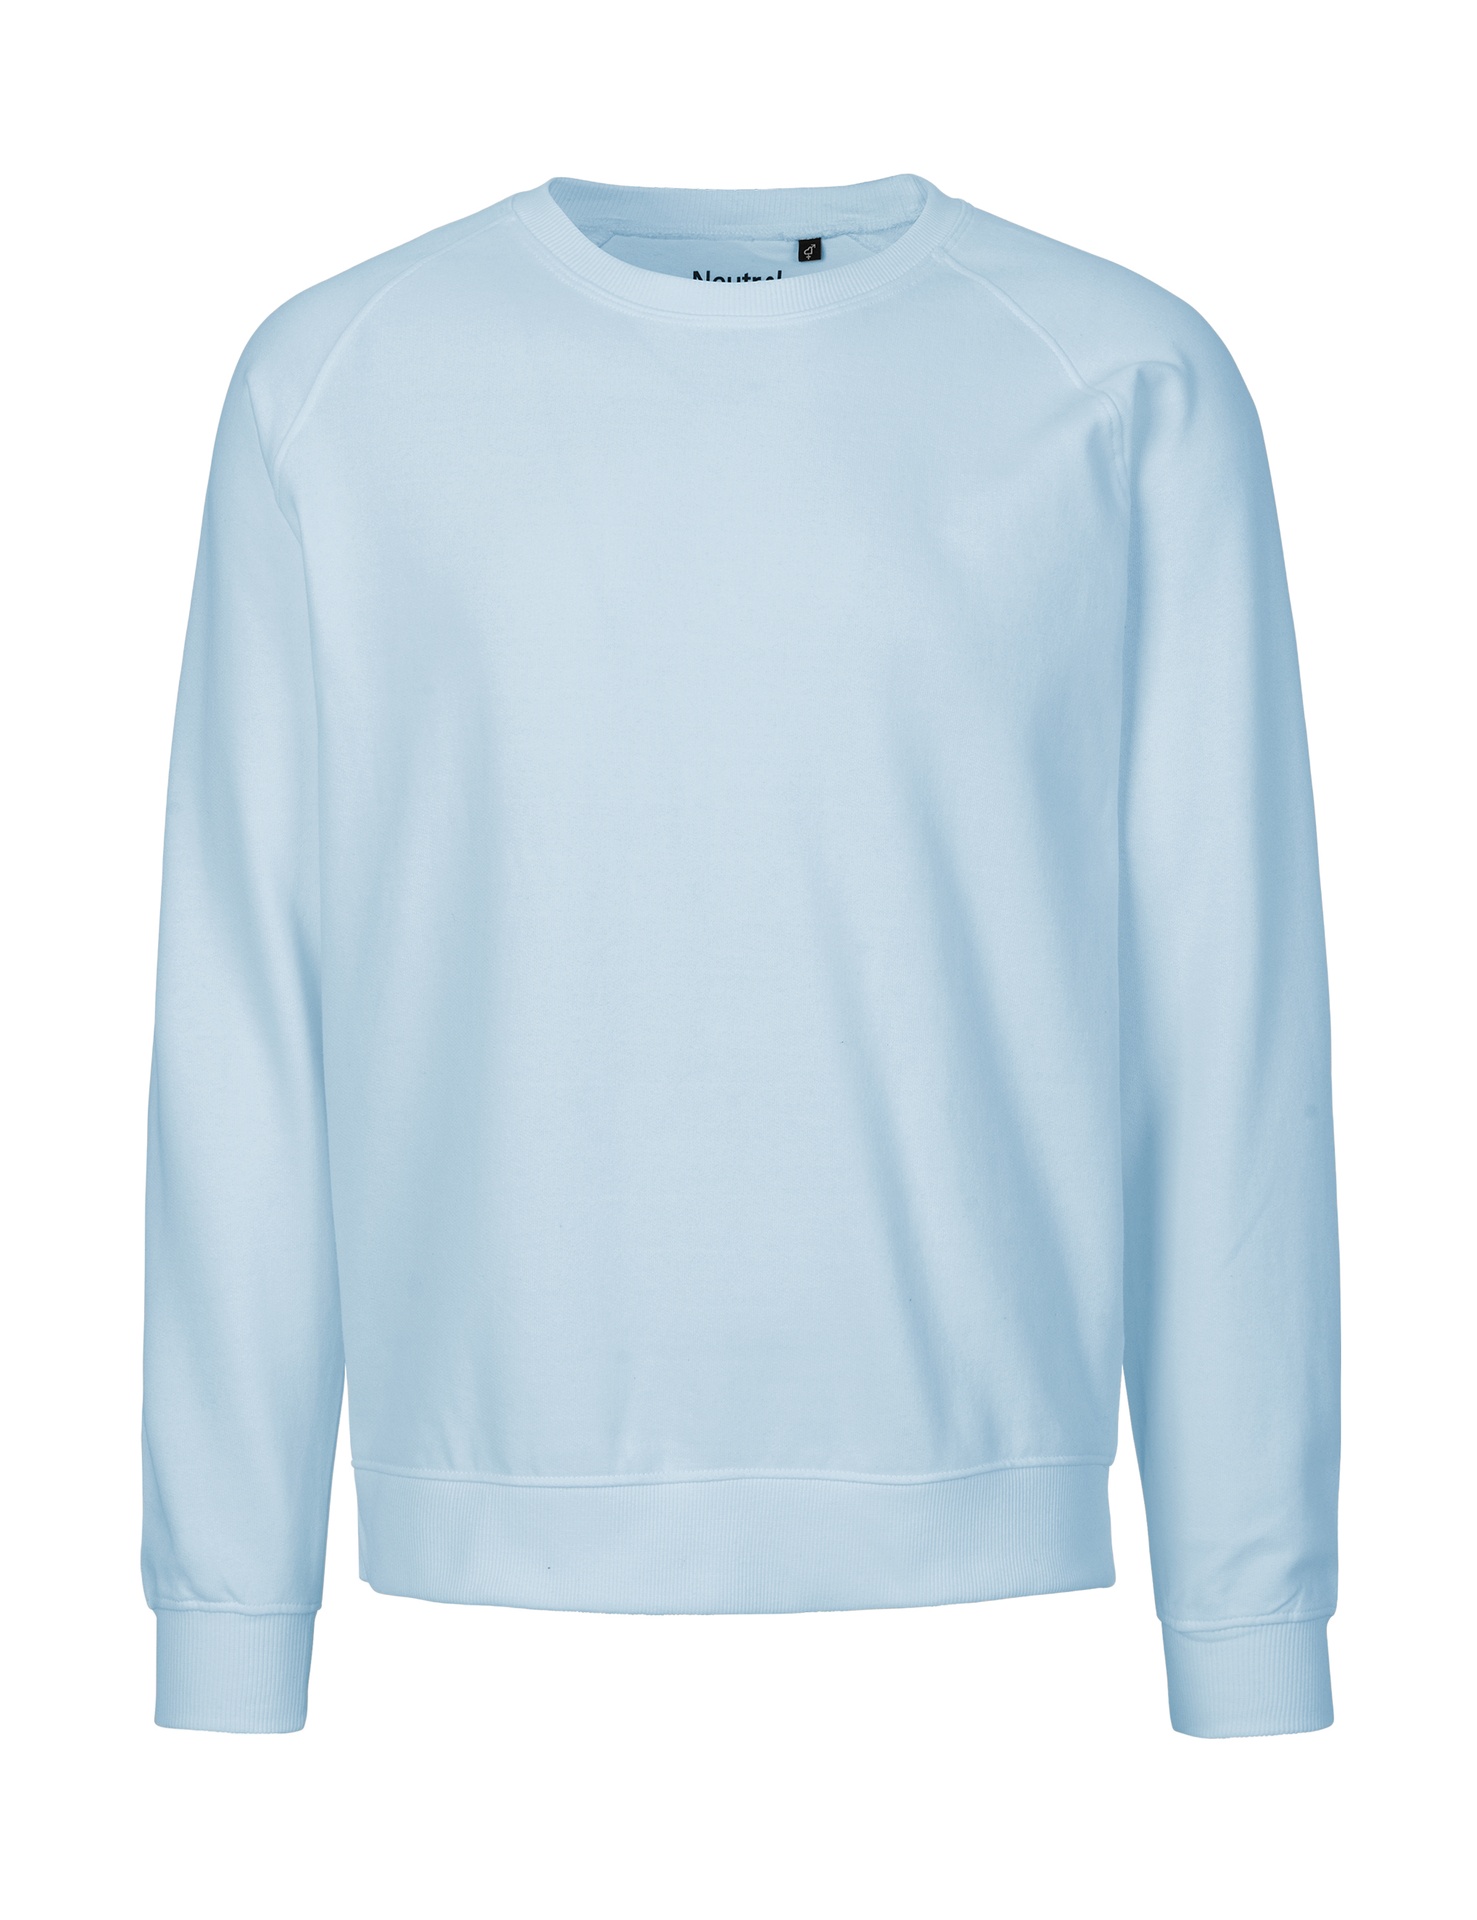 [PR/02894] Unisex Sweatshirt (Light Blue 69, 5XL)